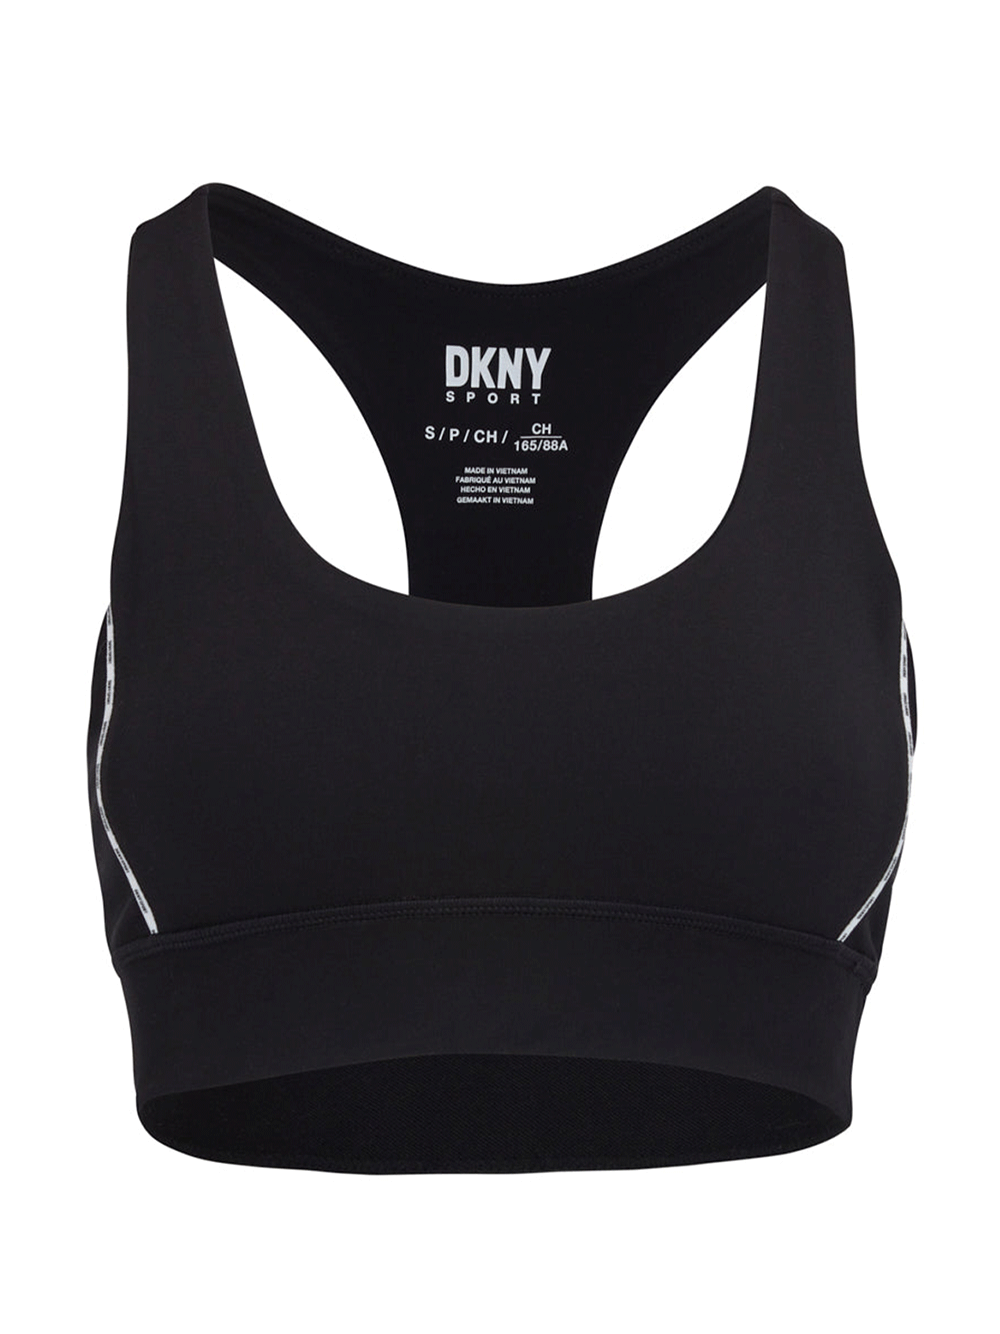 DKNY-Sport-Fitness-Piping-Scoop-Neck-Bra-Black-1